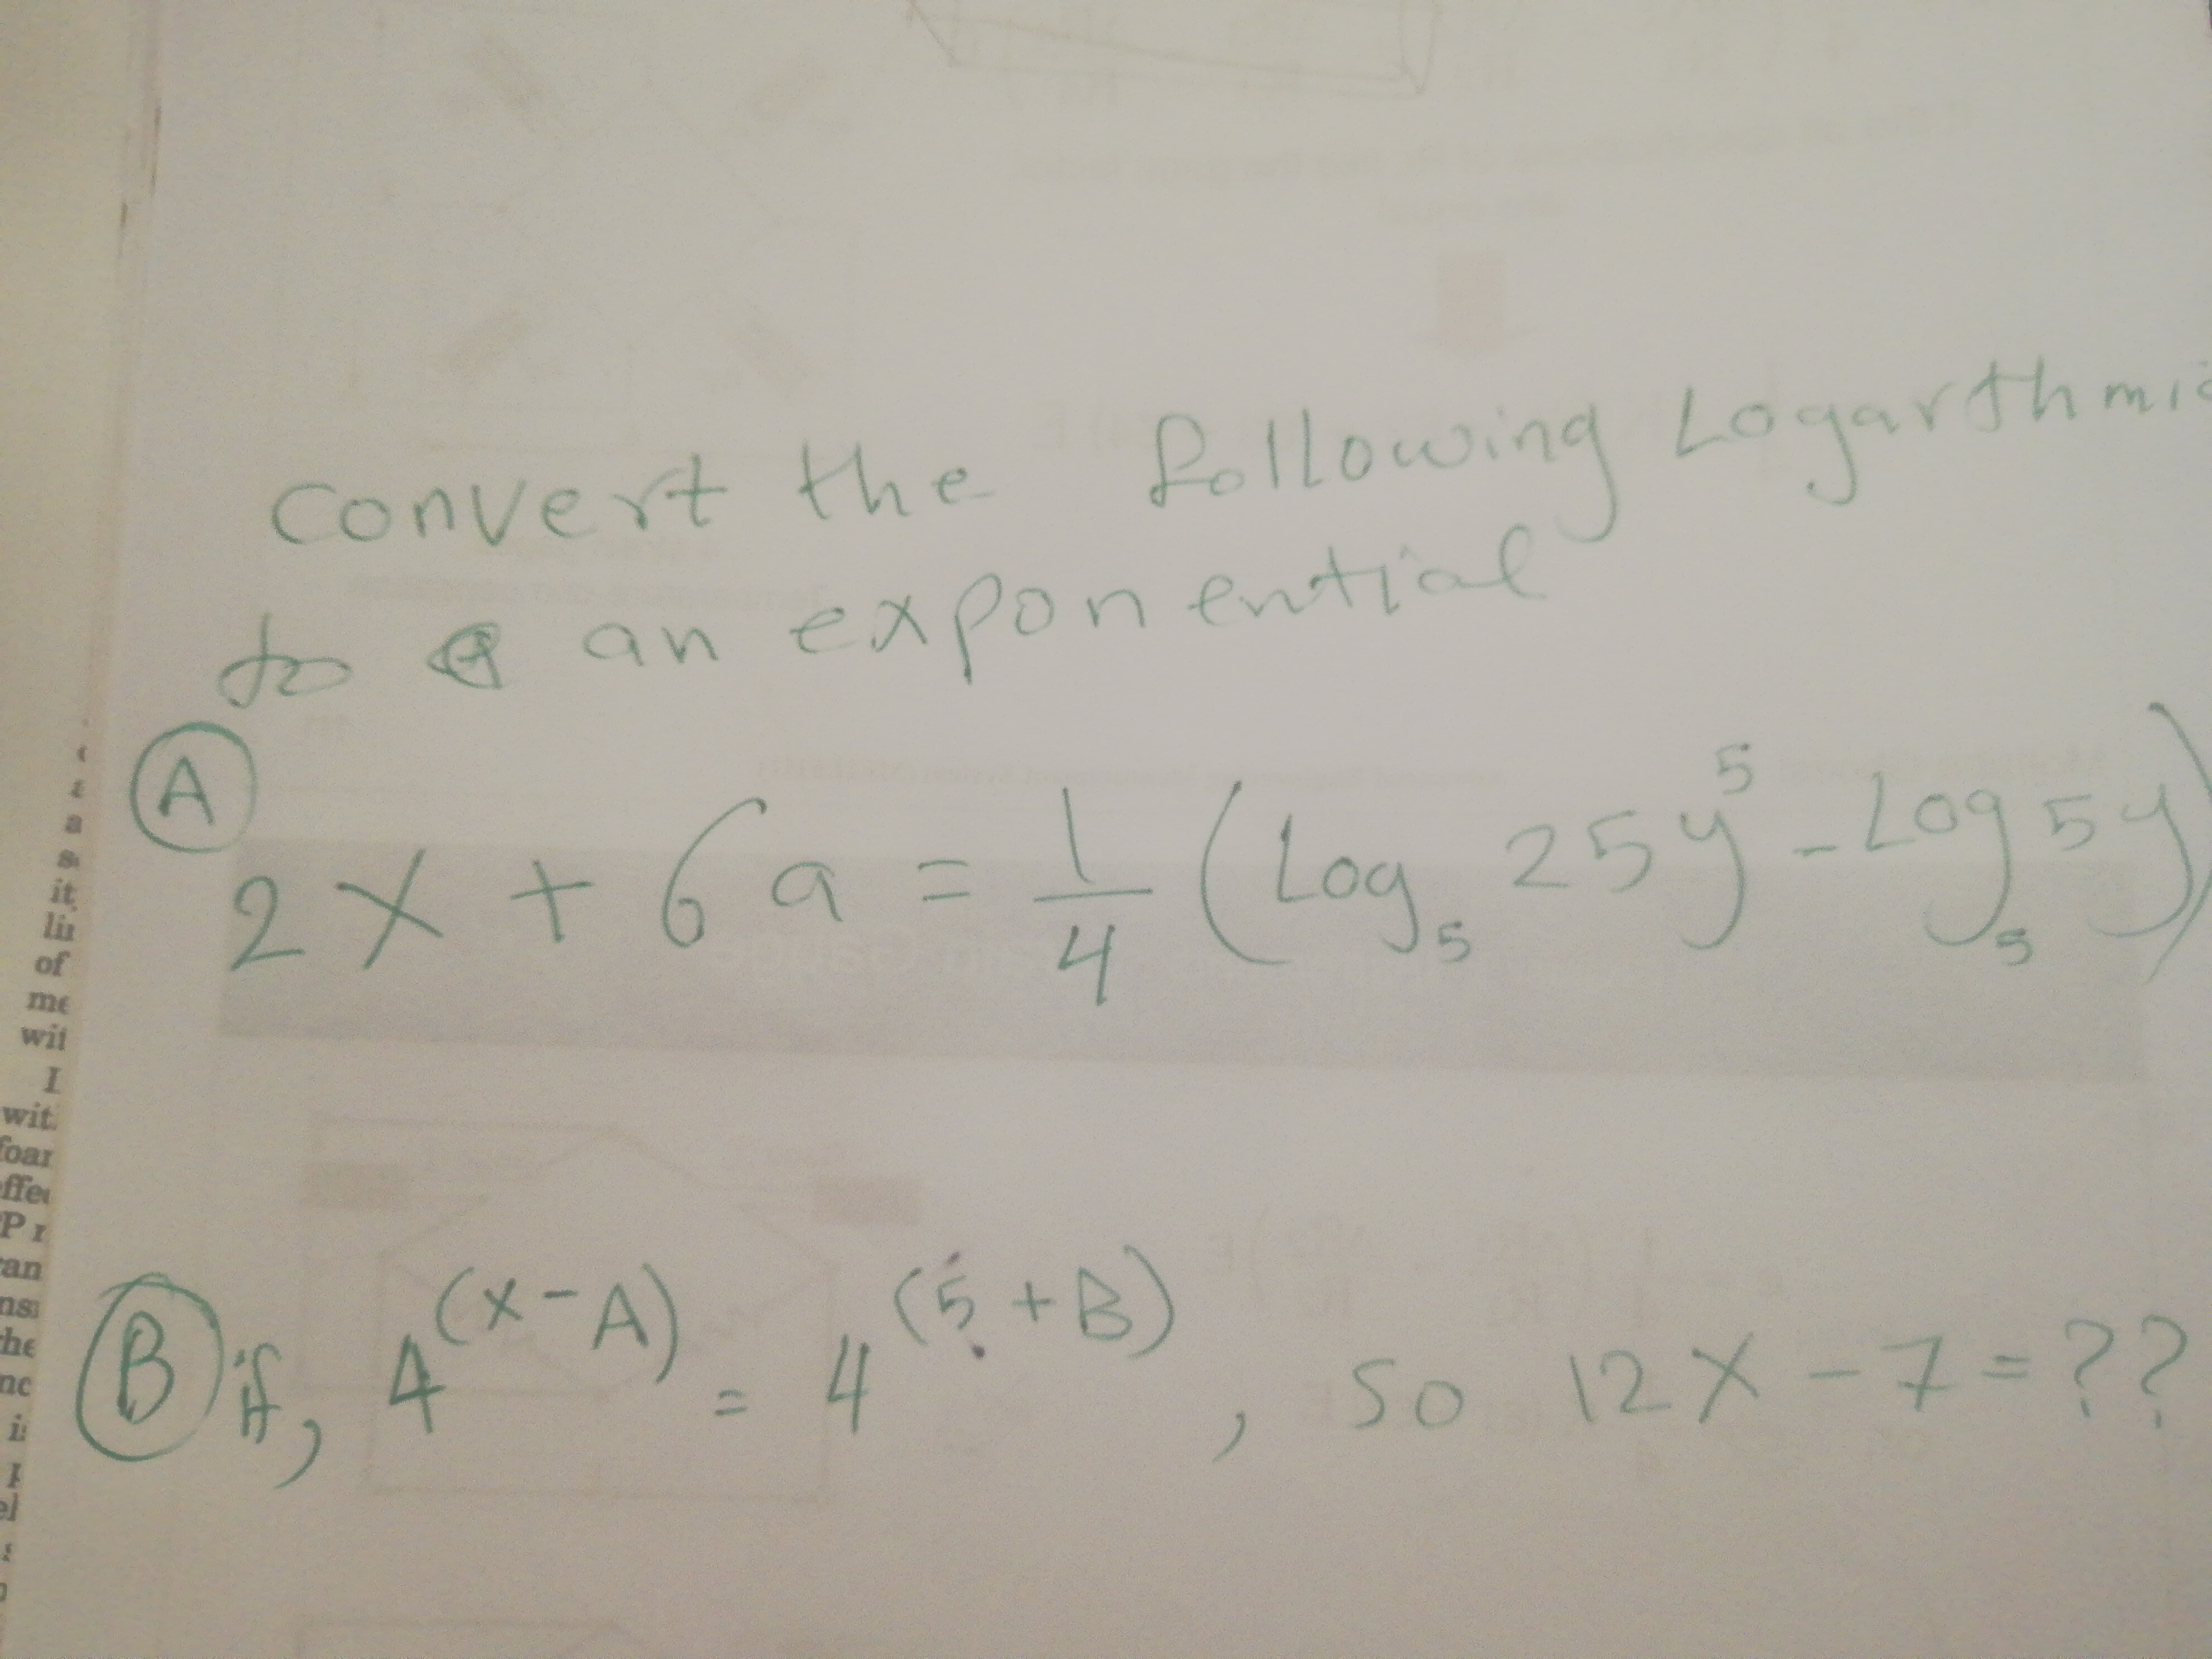 Convert
nential
o Q an exponentlal
2メナ6の=
Log
4
(x-A)
(ら+B)
4
4.
so
